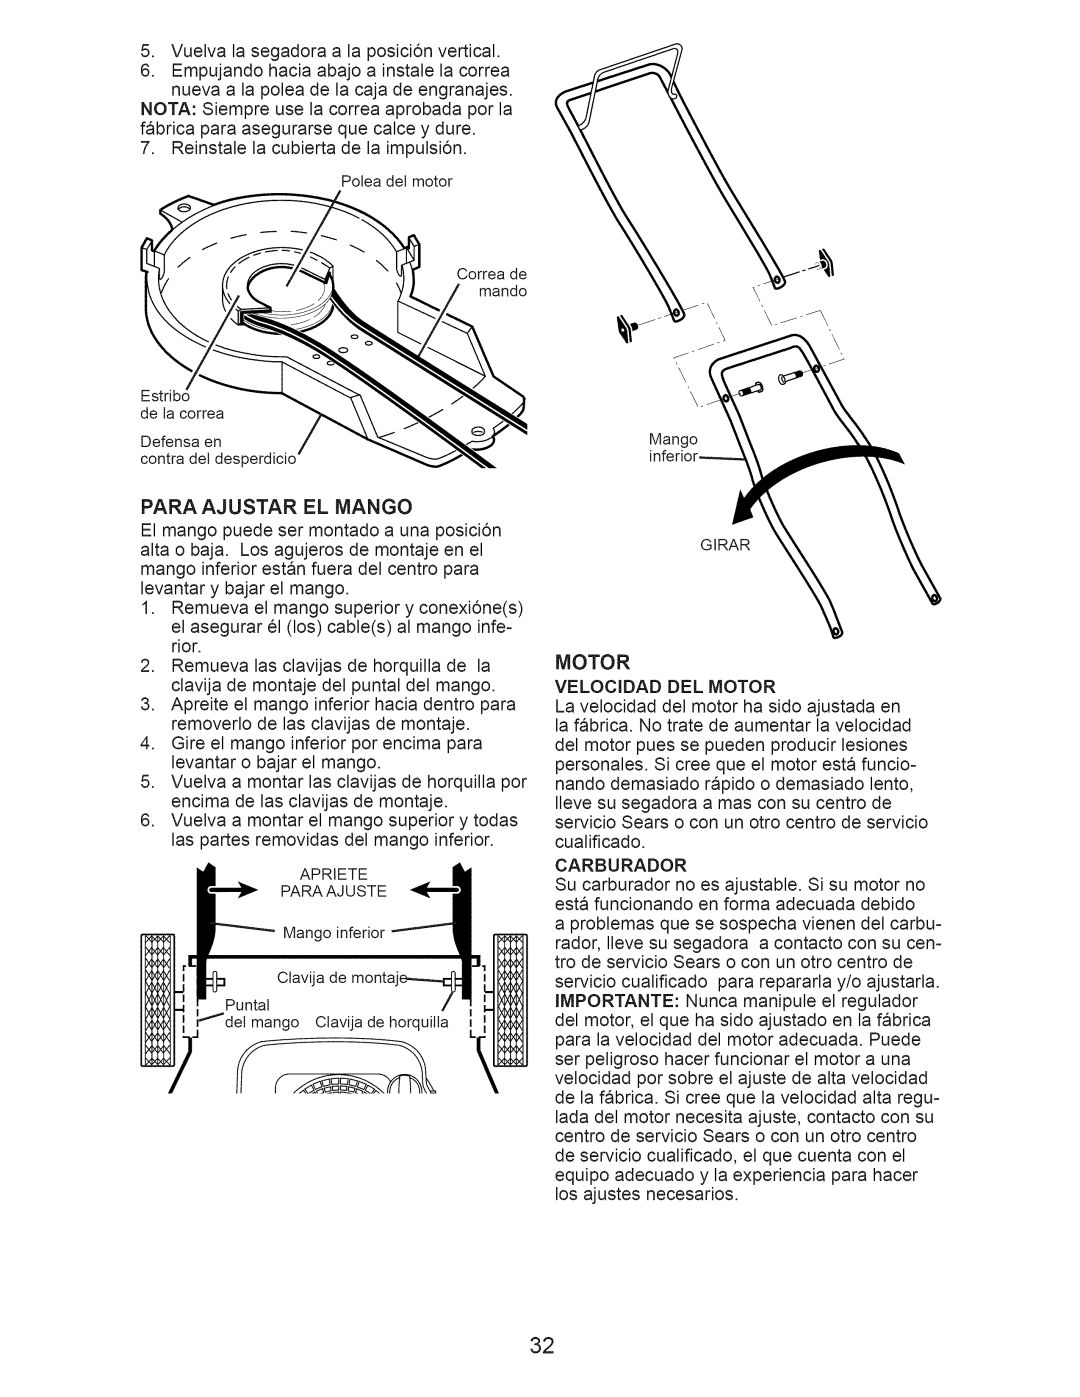 Craftsman 917.375010 owner manual Para Ajustar El Mango, Motor 